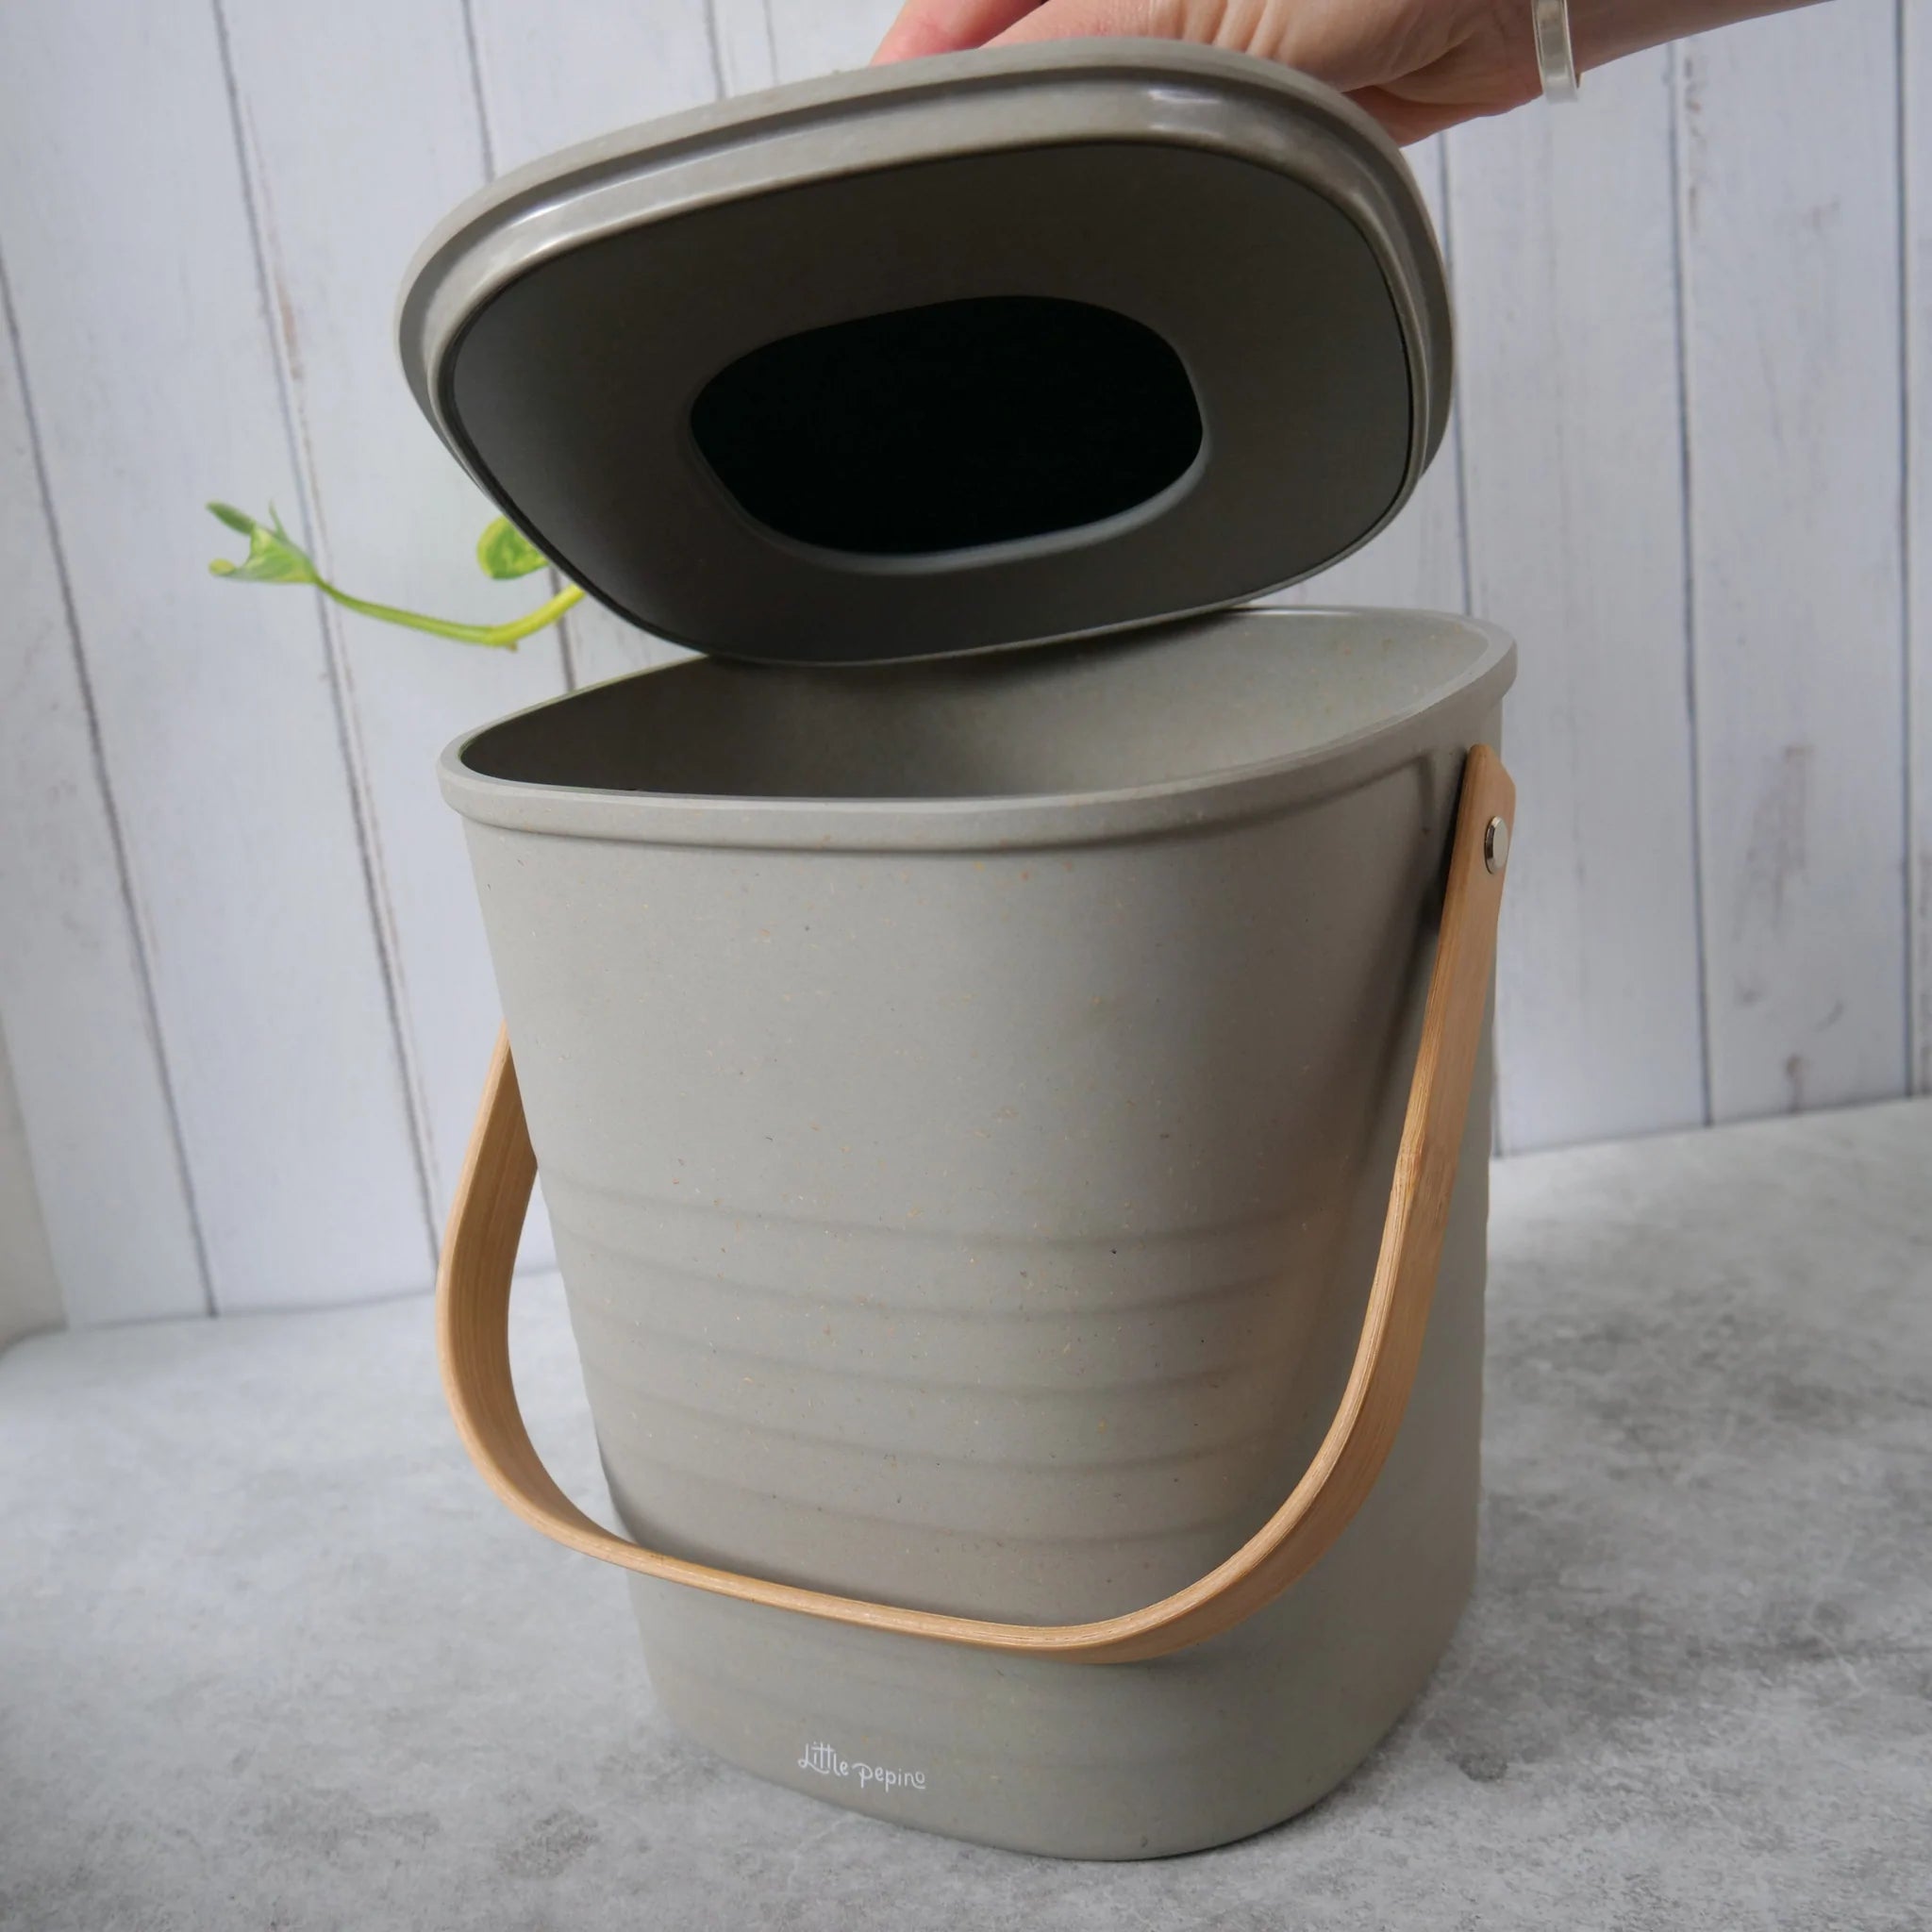 Retro Kitchen Compost Bin – Good Kind Home